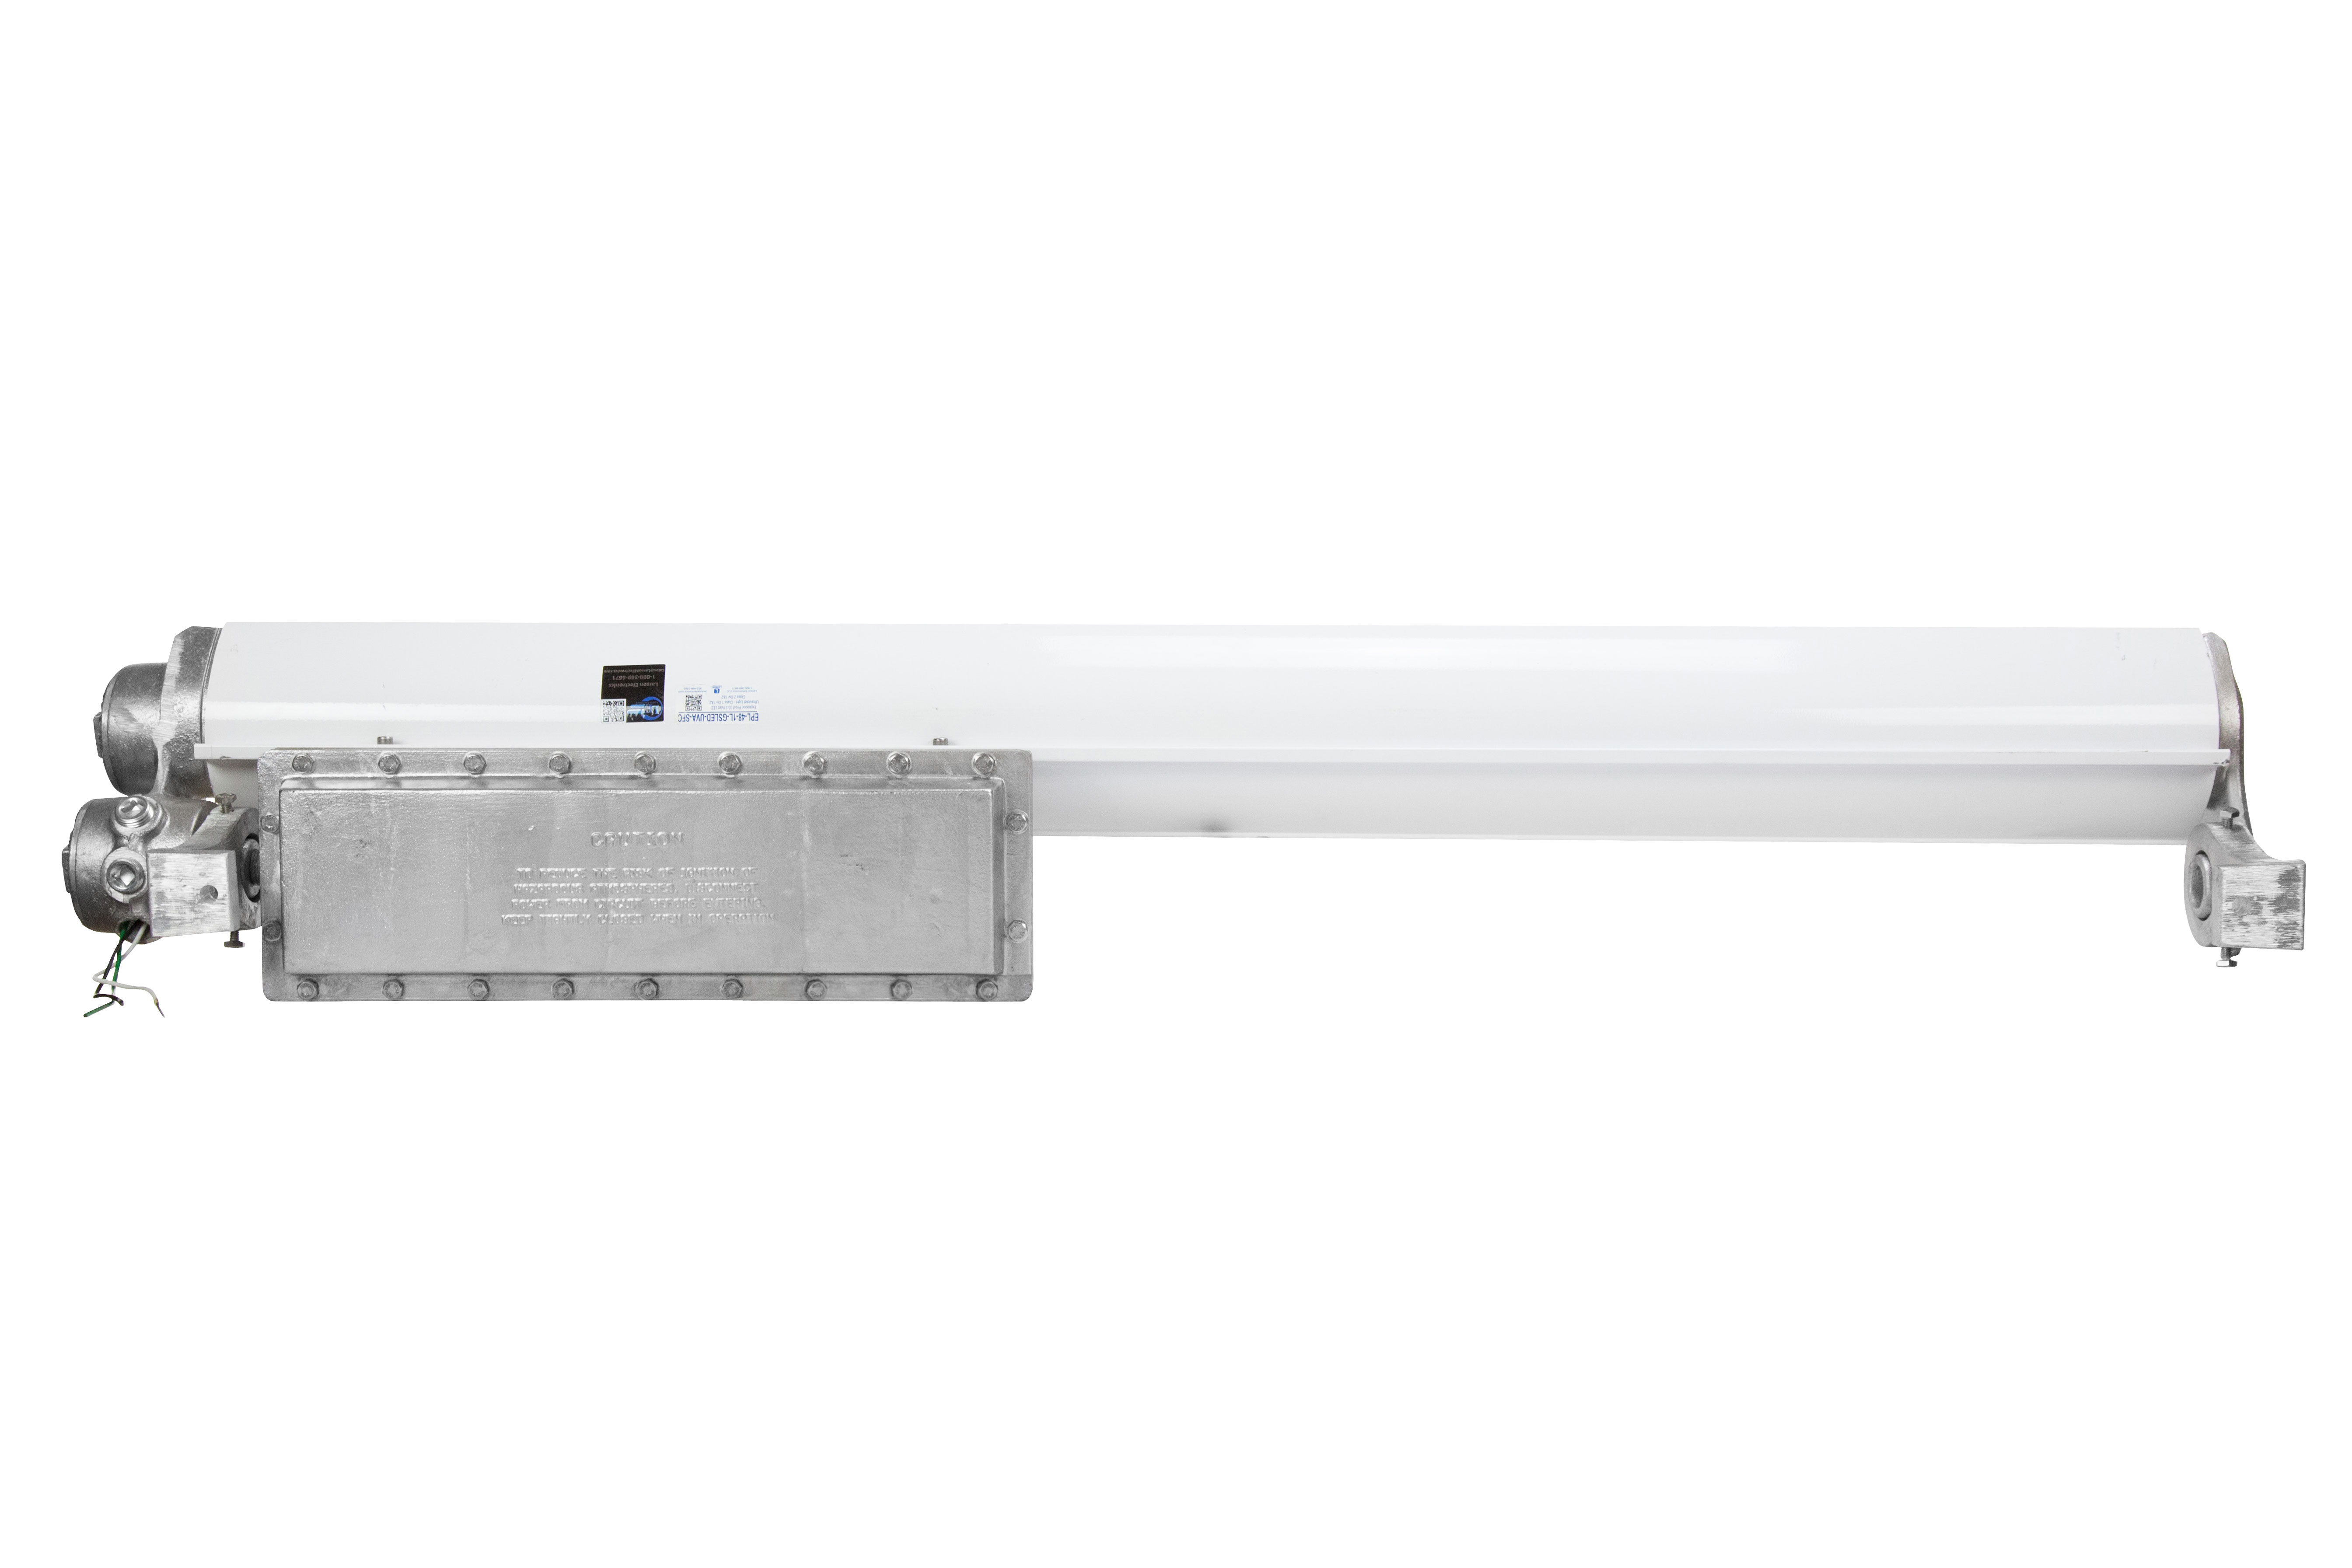 Ultraviolet LED Light Fixture Equipped with a Single 33.5 Watt Light Emitter